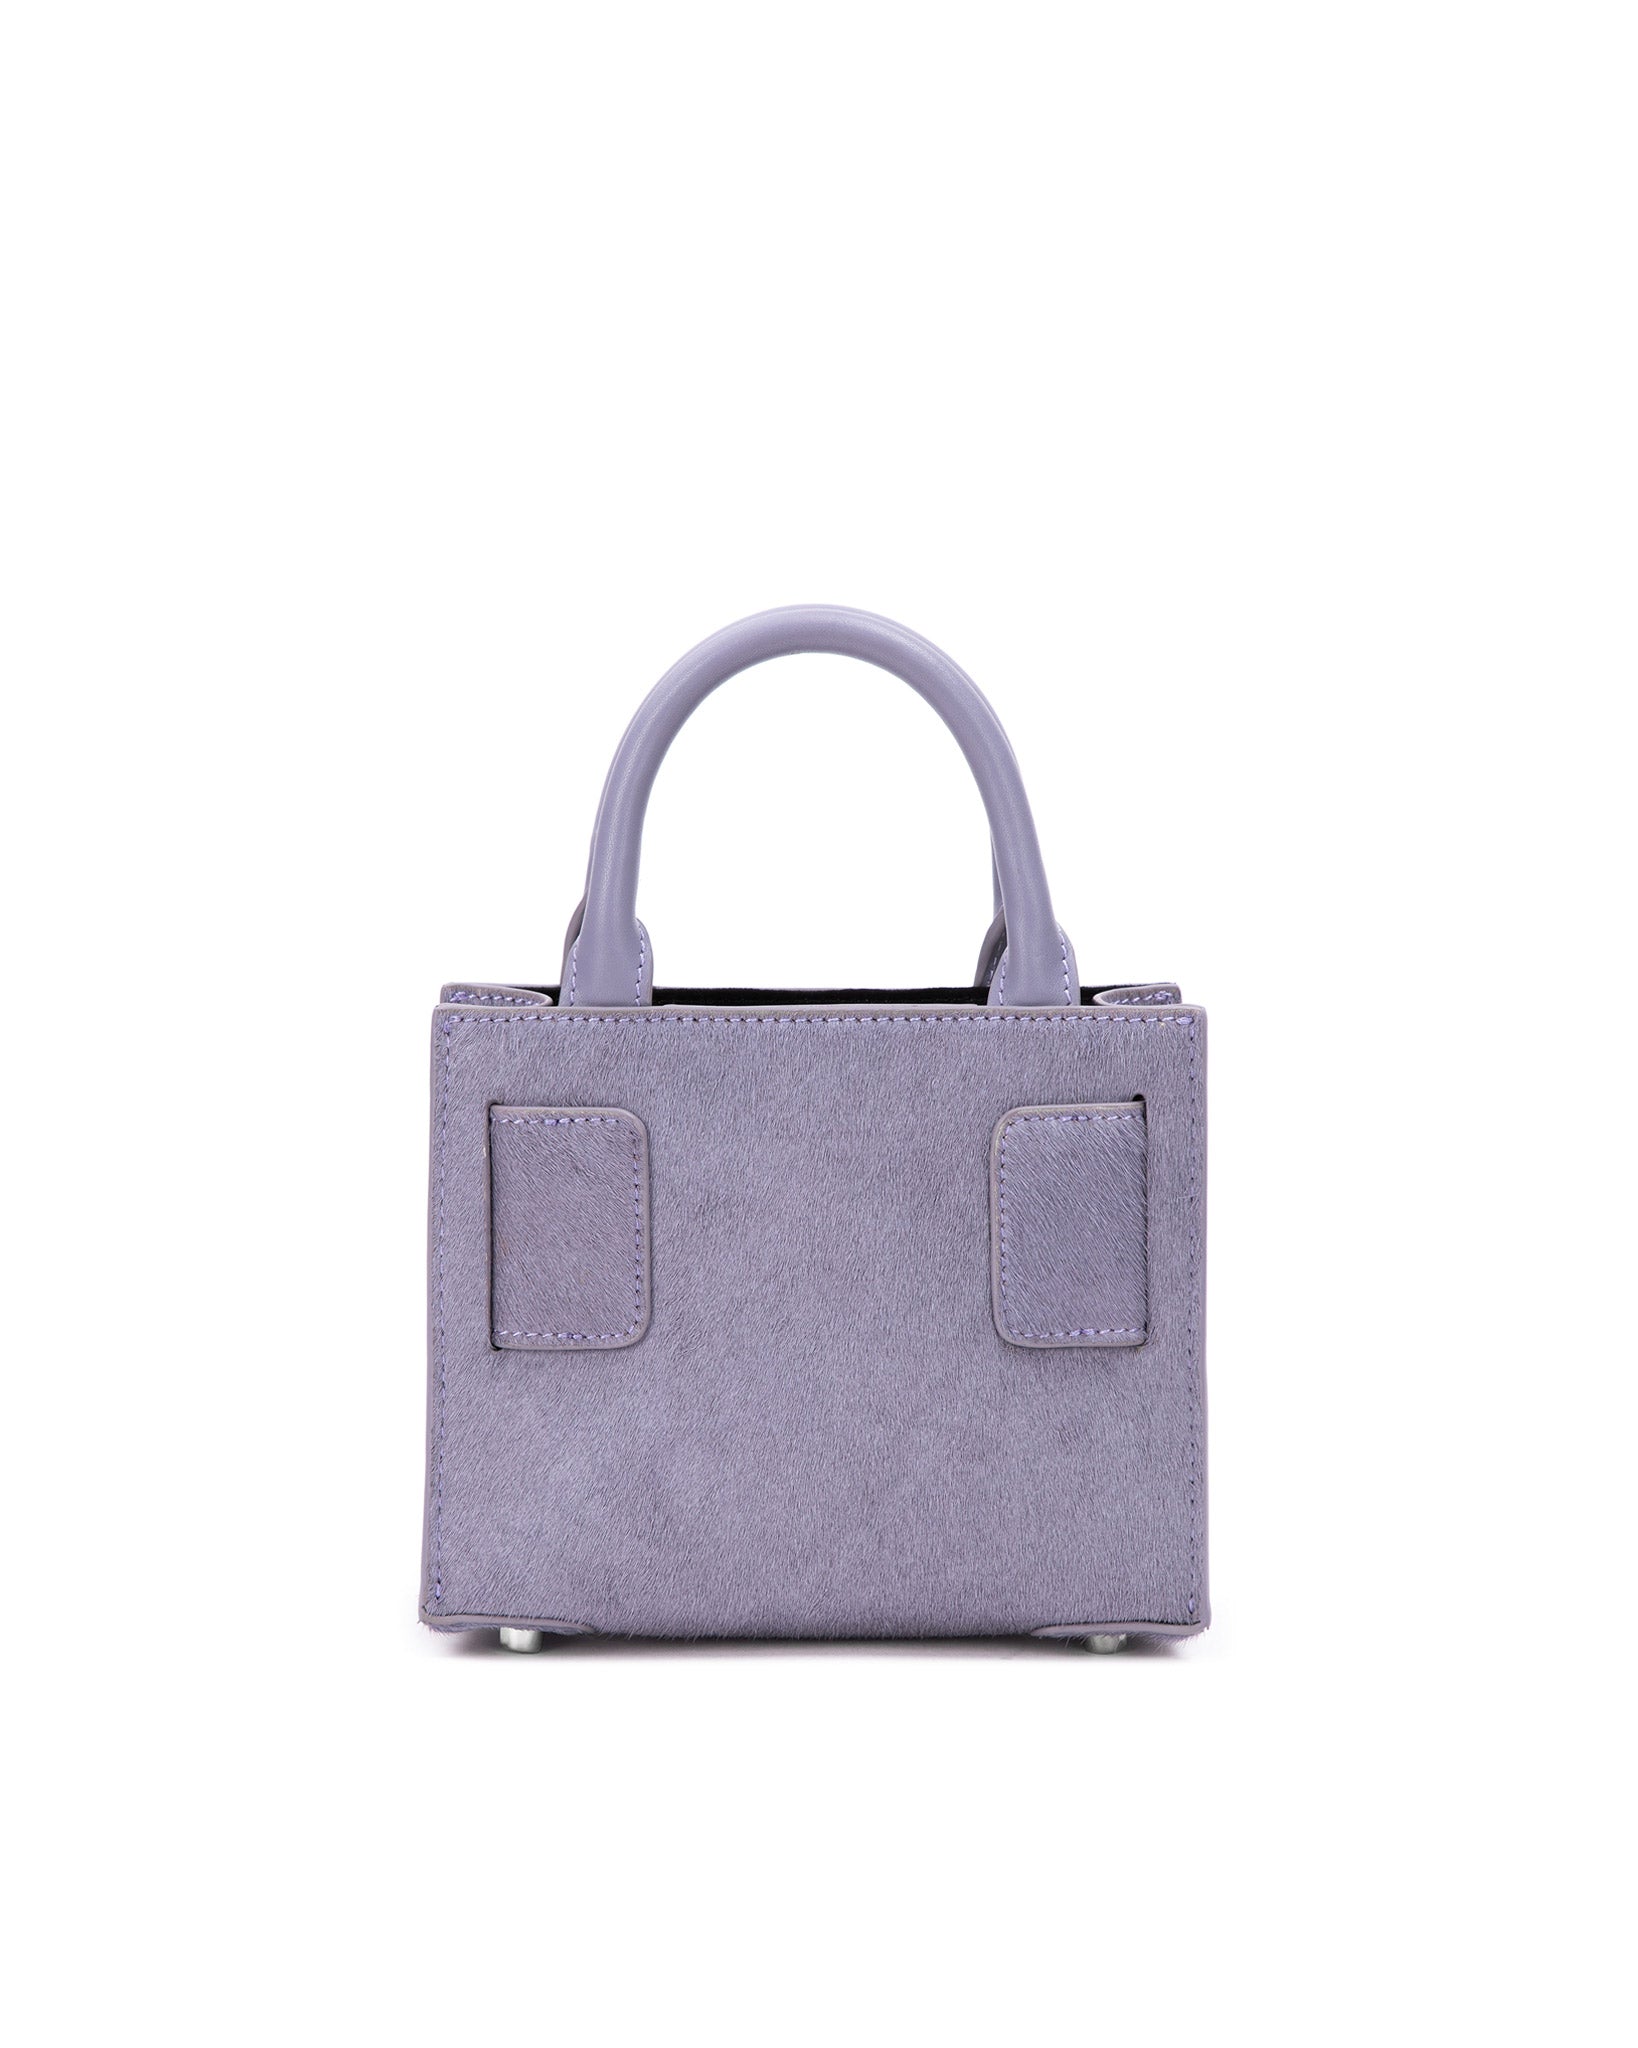 Light Purple / Lilac Croco Medium Bag made in New York City